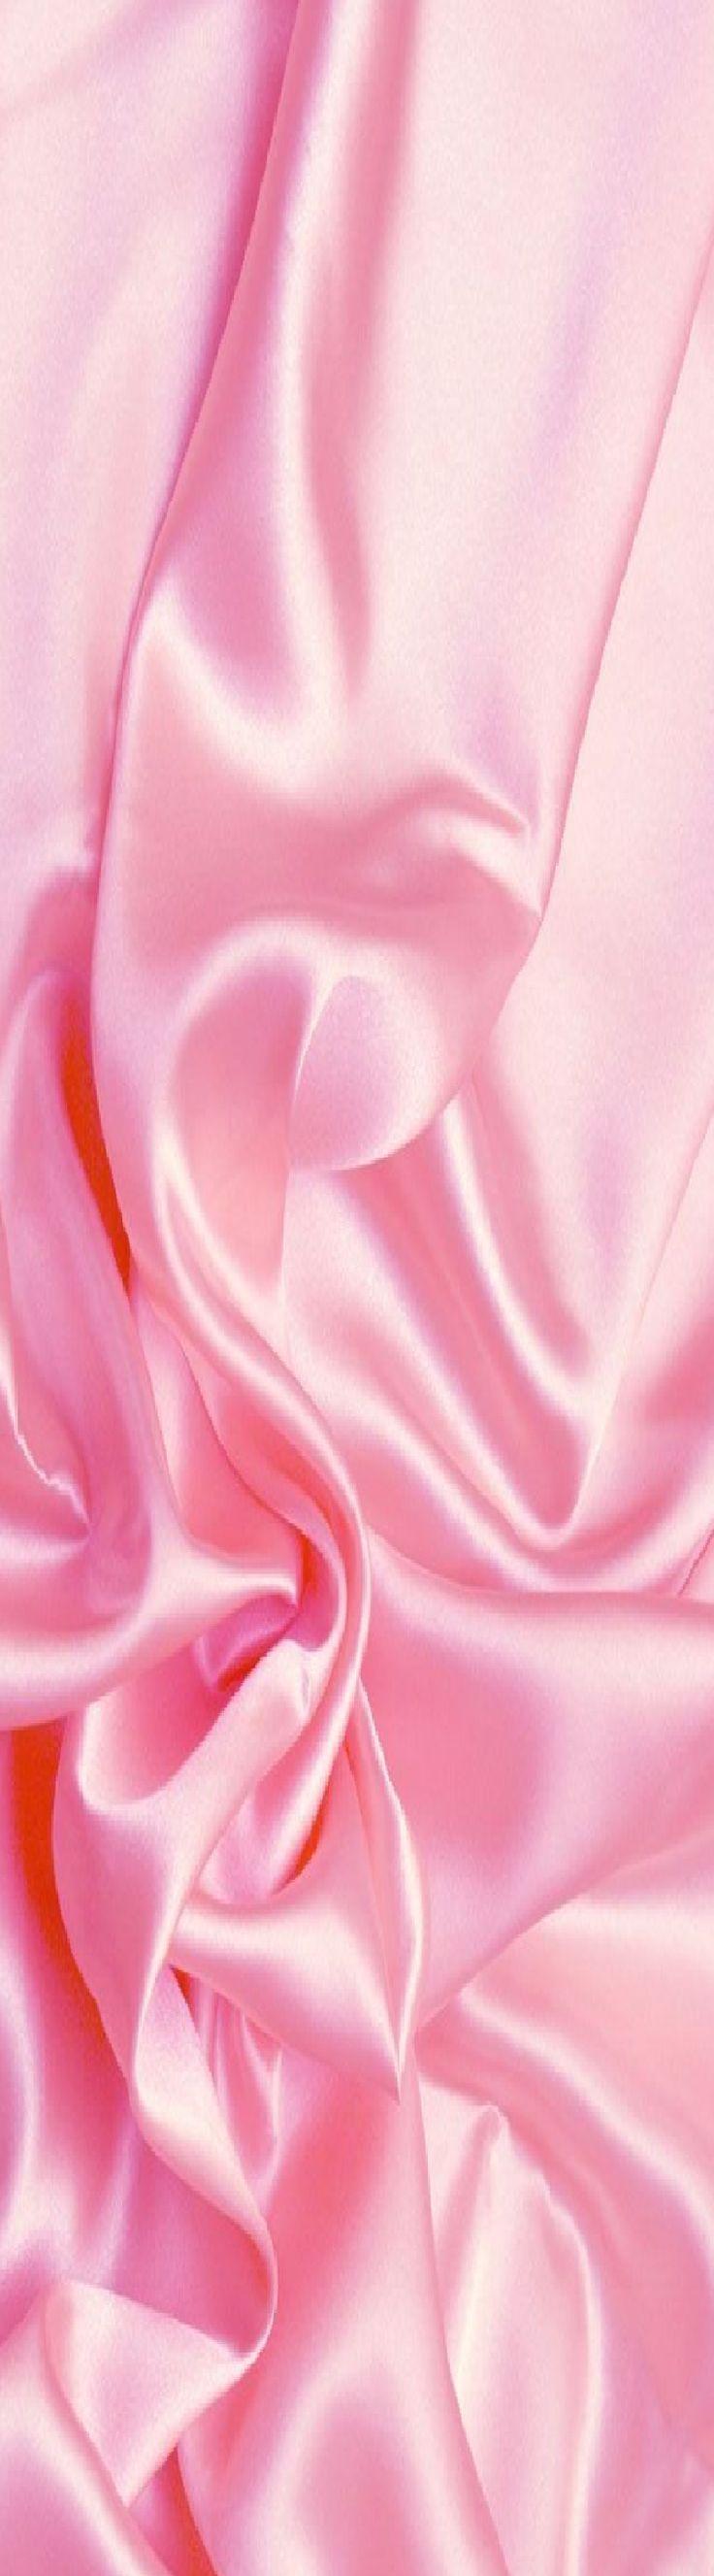 Frivolous Fabulous Silk and Pink Frivolous Fabulous And So To